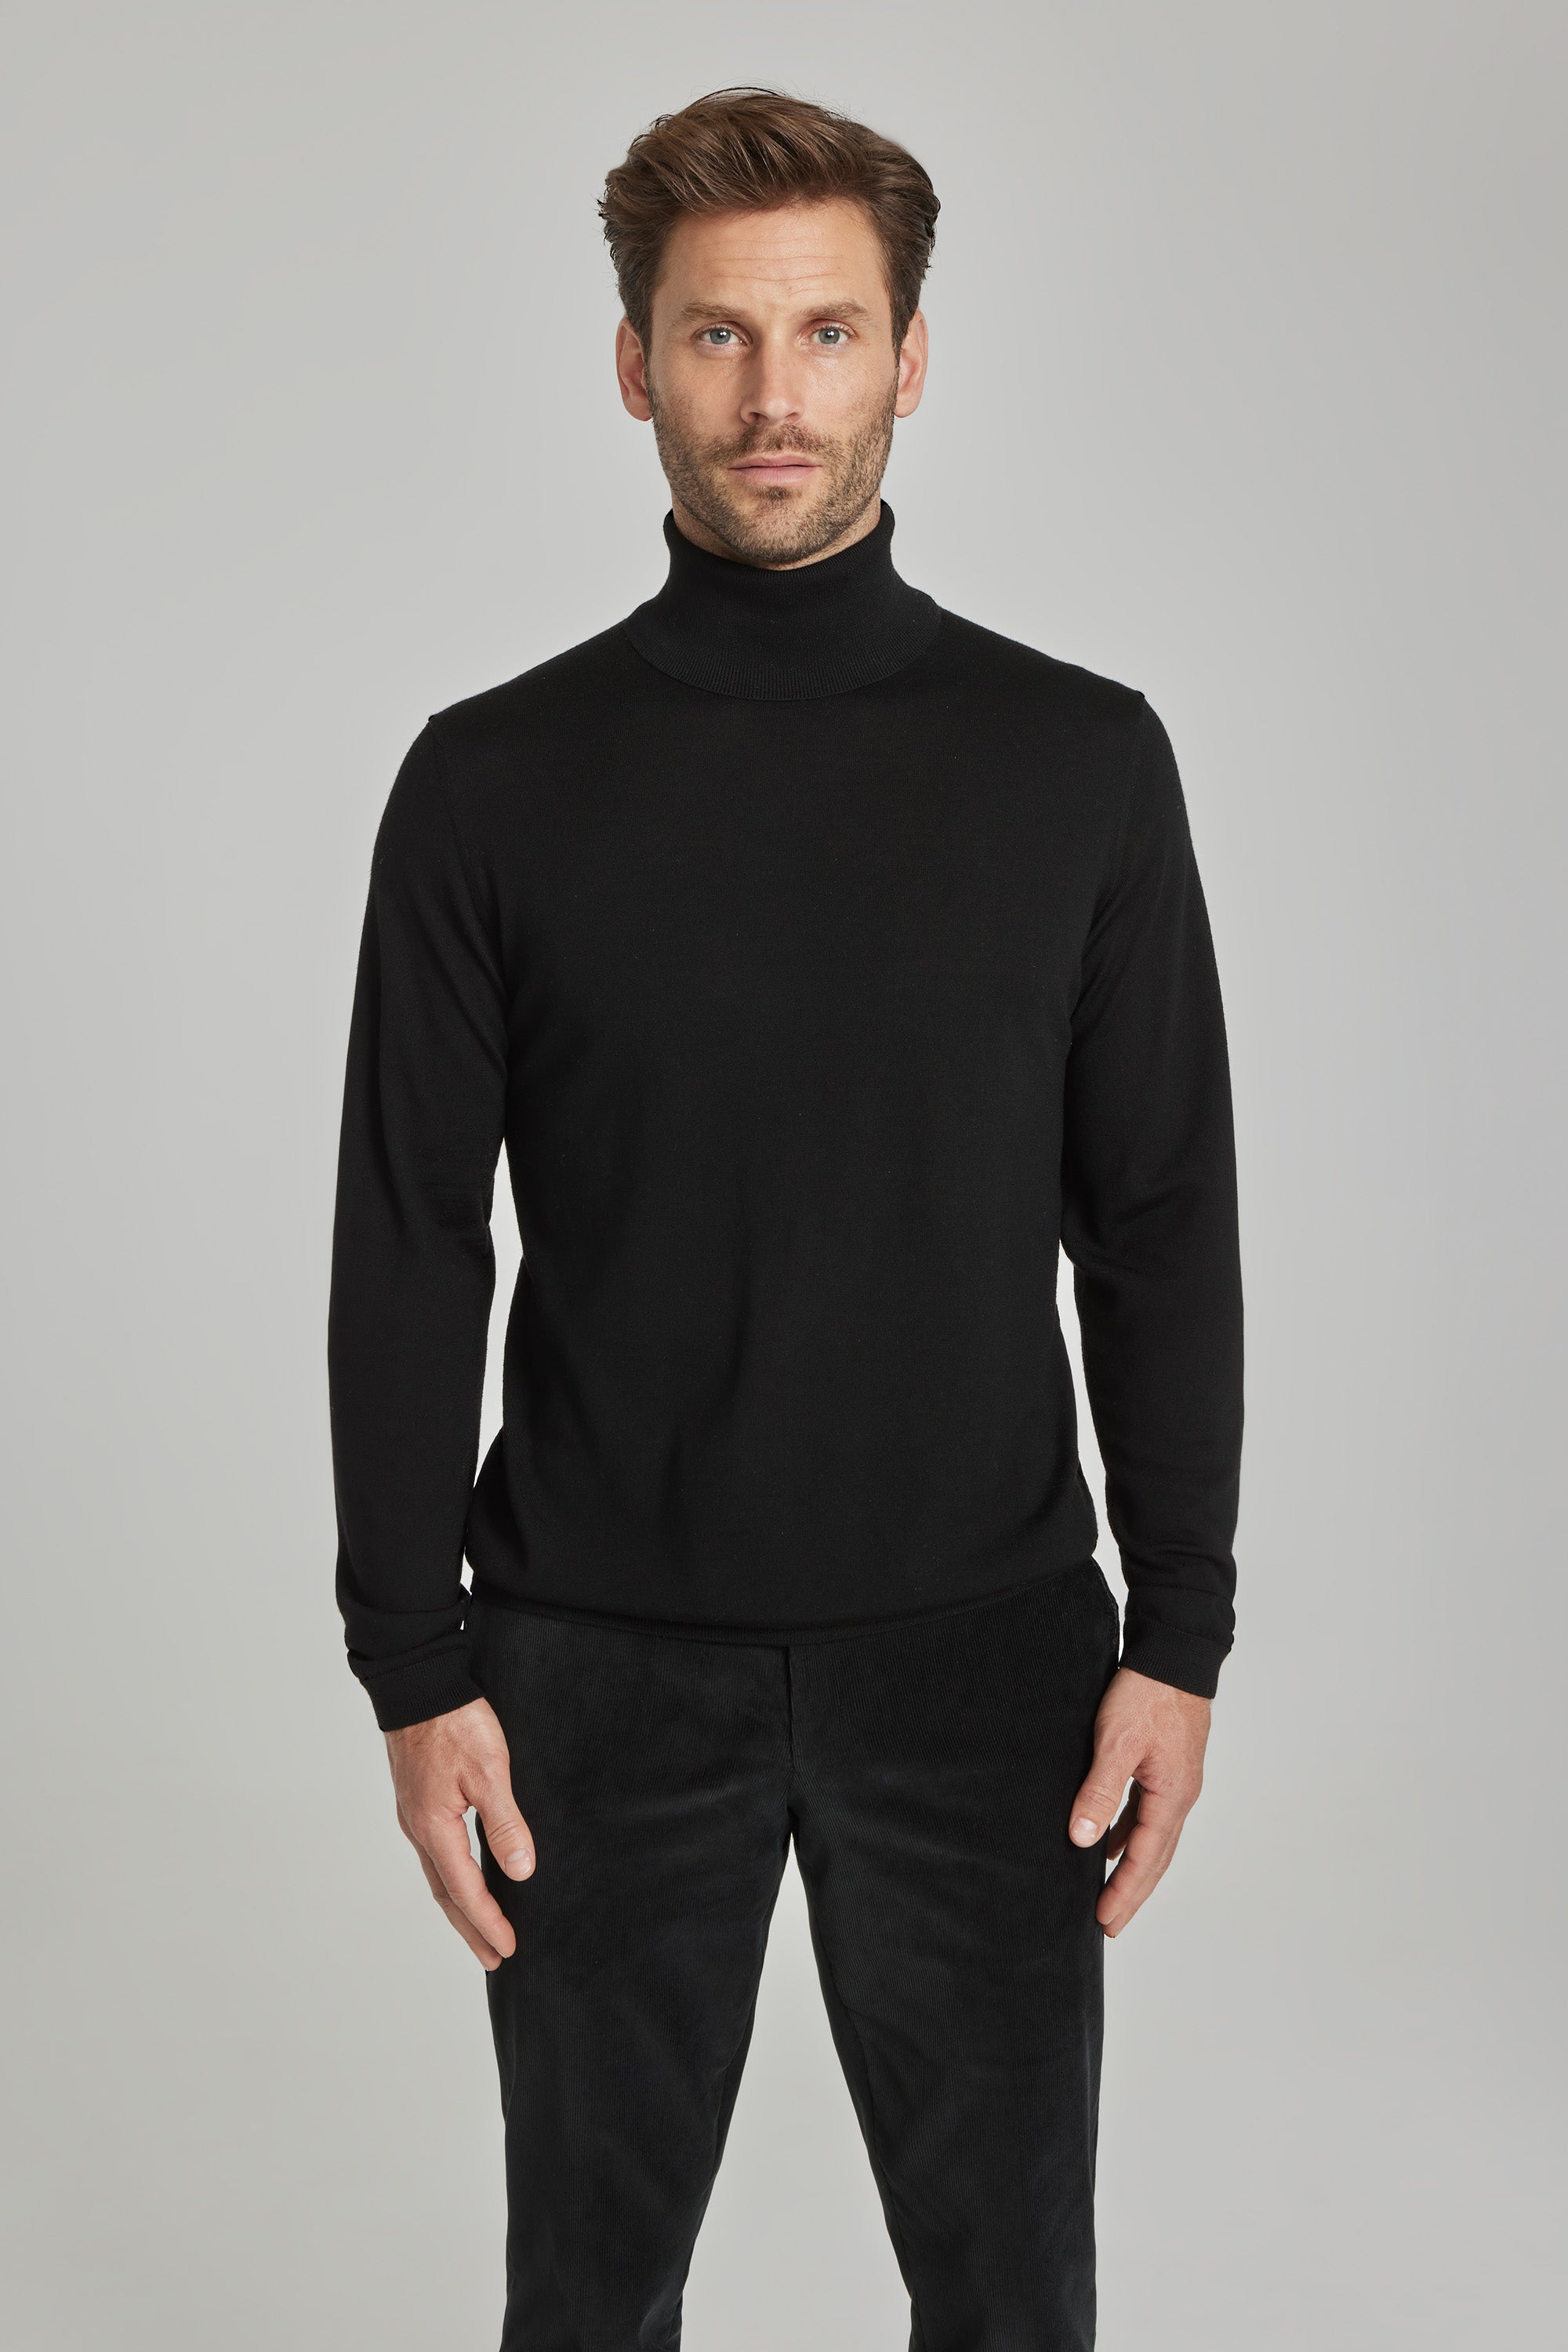 Image of Felix Solid Wool, Silk and Cashmere Turtleneck in Black-Jack Victor